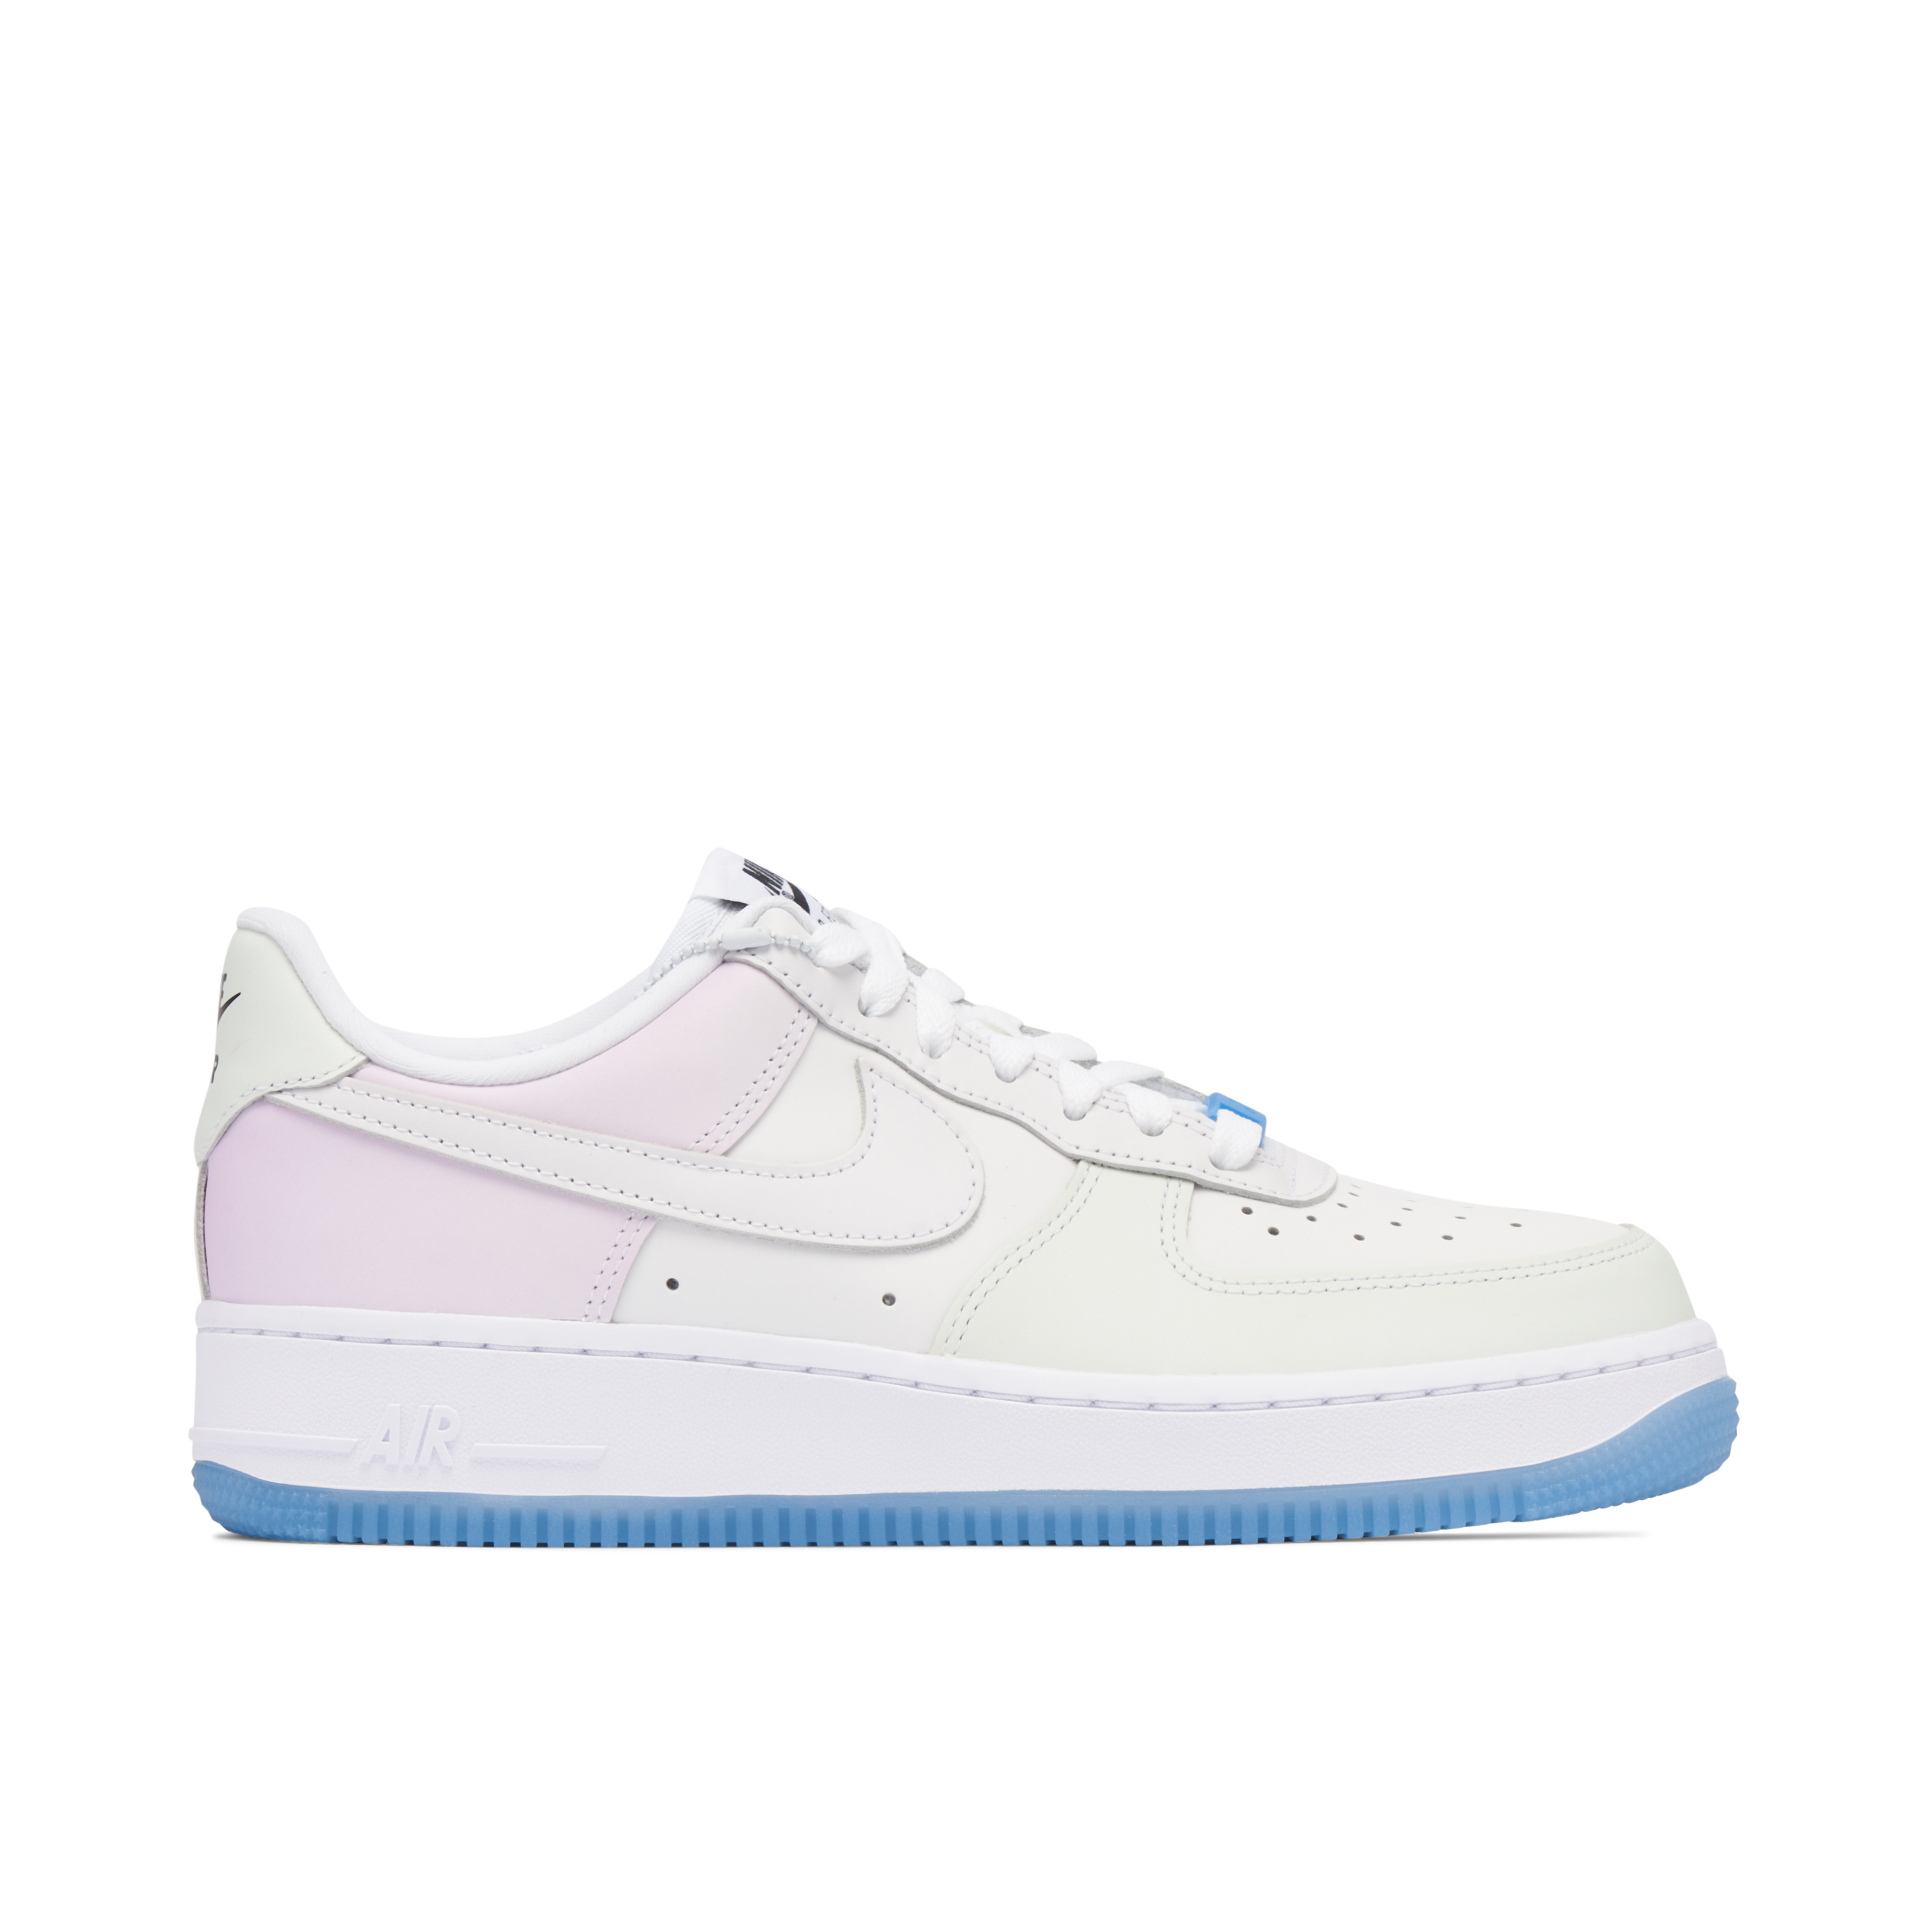 Nike Air Force 1 LV8 KSA 3-D Glasses Shoes Size 3Y CJ7160-100 White Pink  Blue